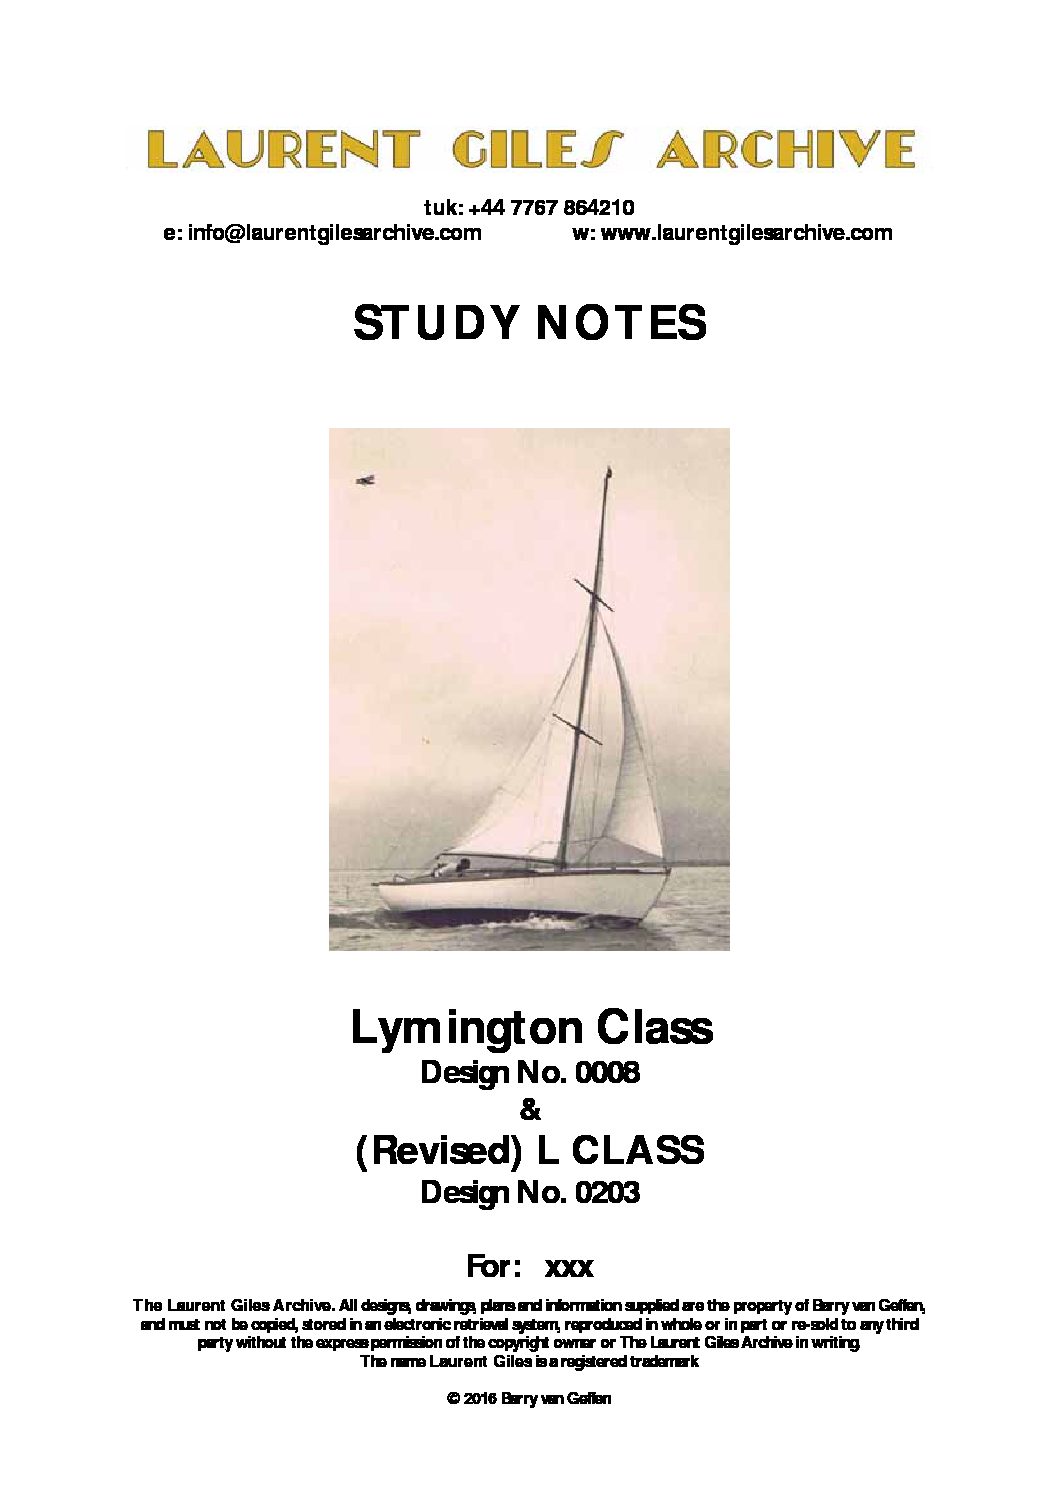 0008 Lymington Class front page